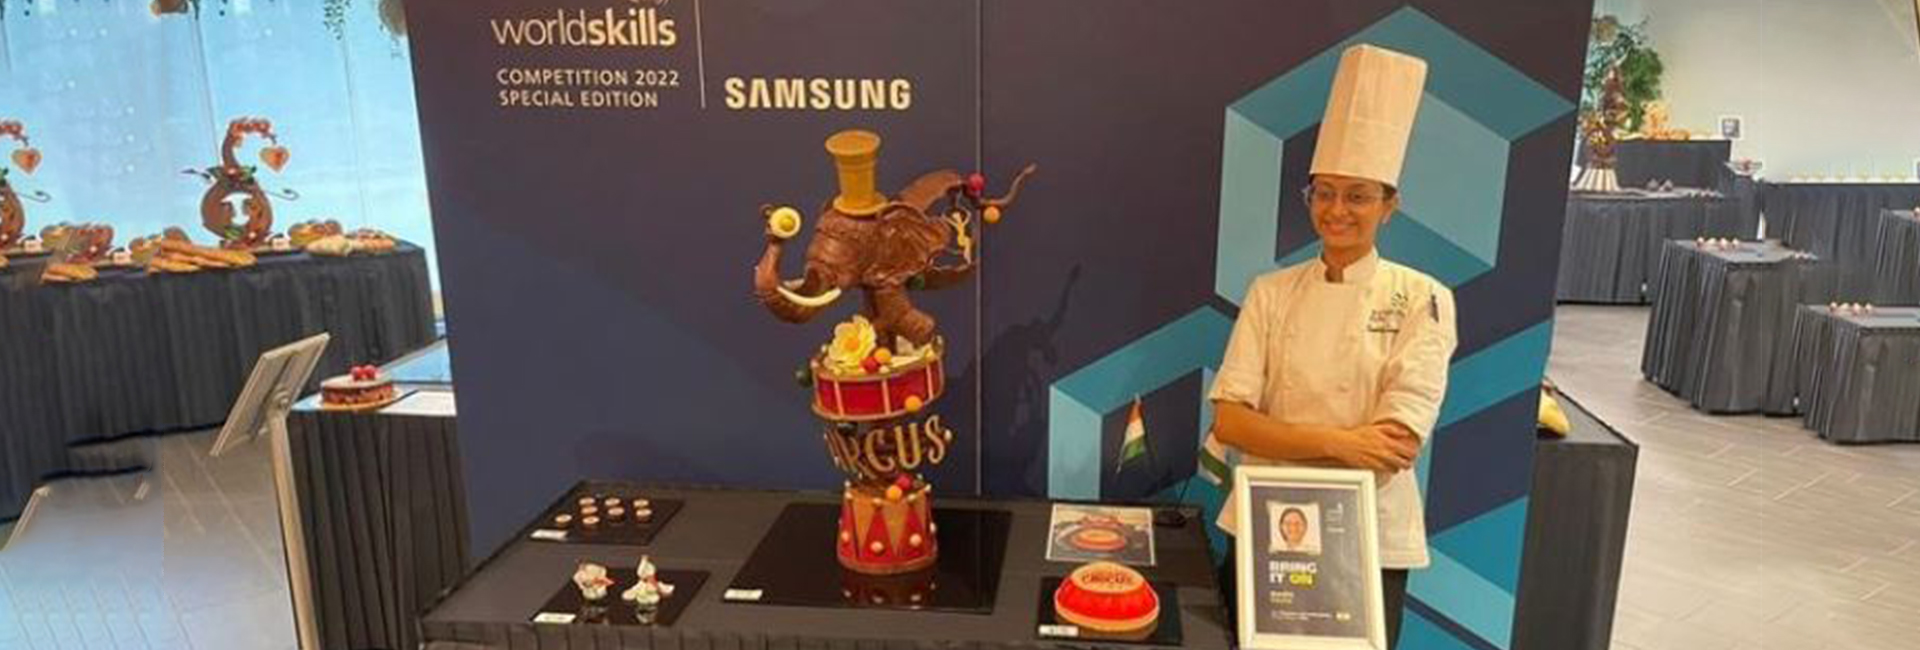 Nandita Saxena, the pastry chef who bagged a silver at WorldSkills 2022